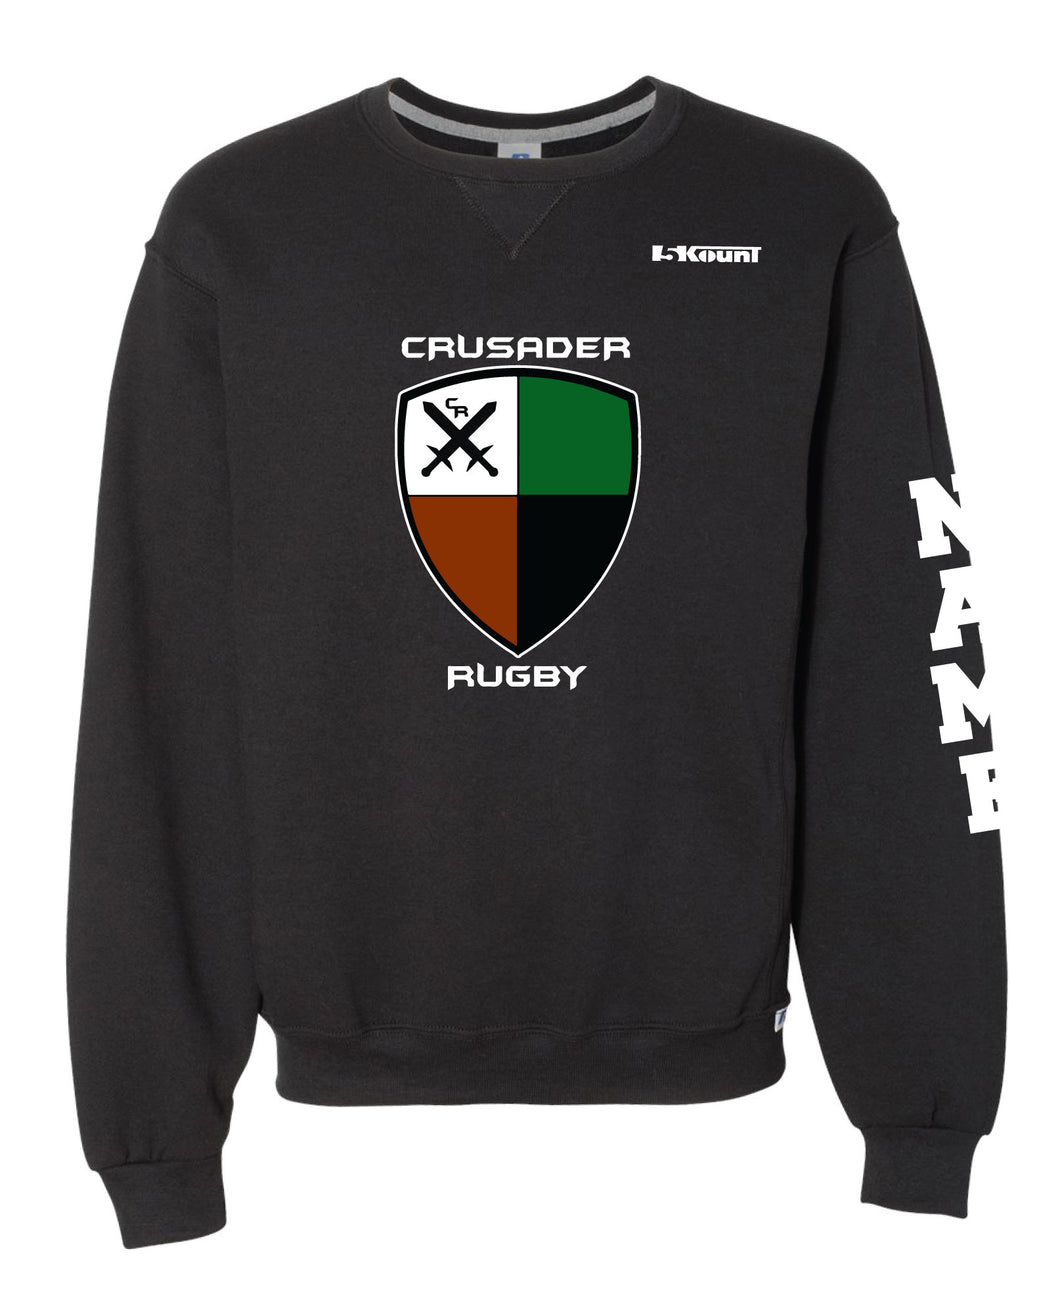 Crusader Rugby Russell Athletic Cotton Crewneck Sweatshirt - Black - 5KounT